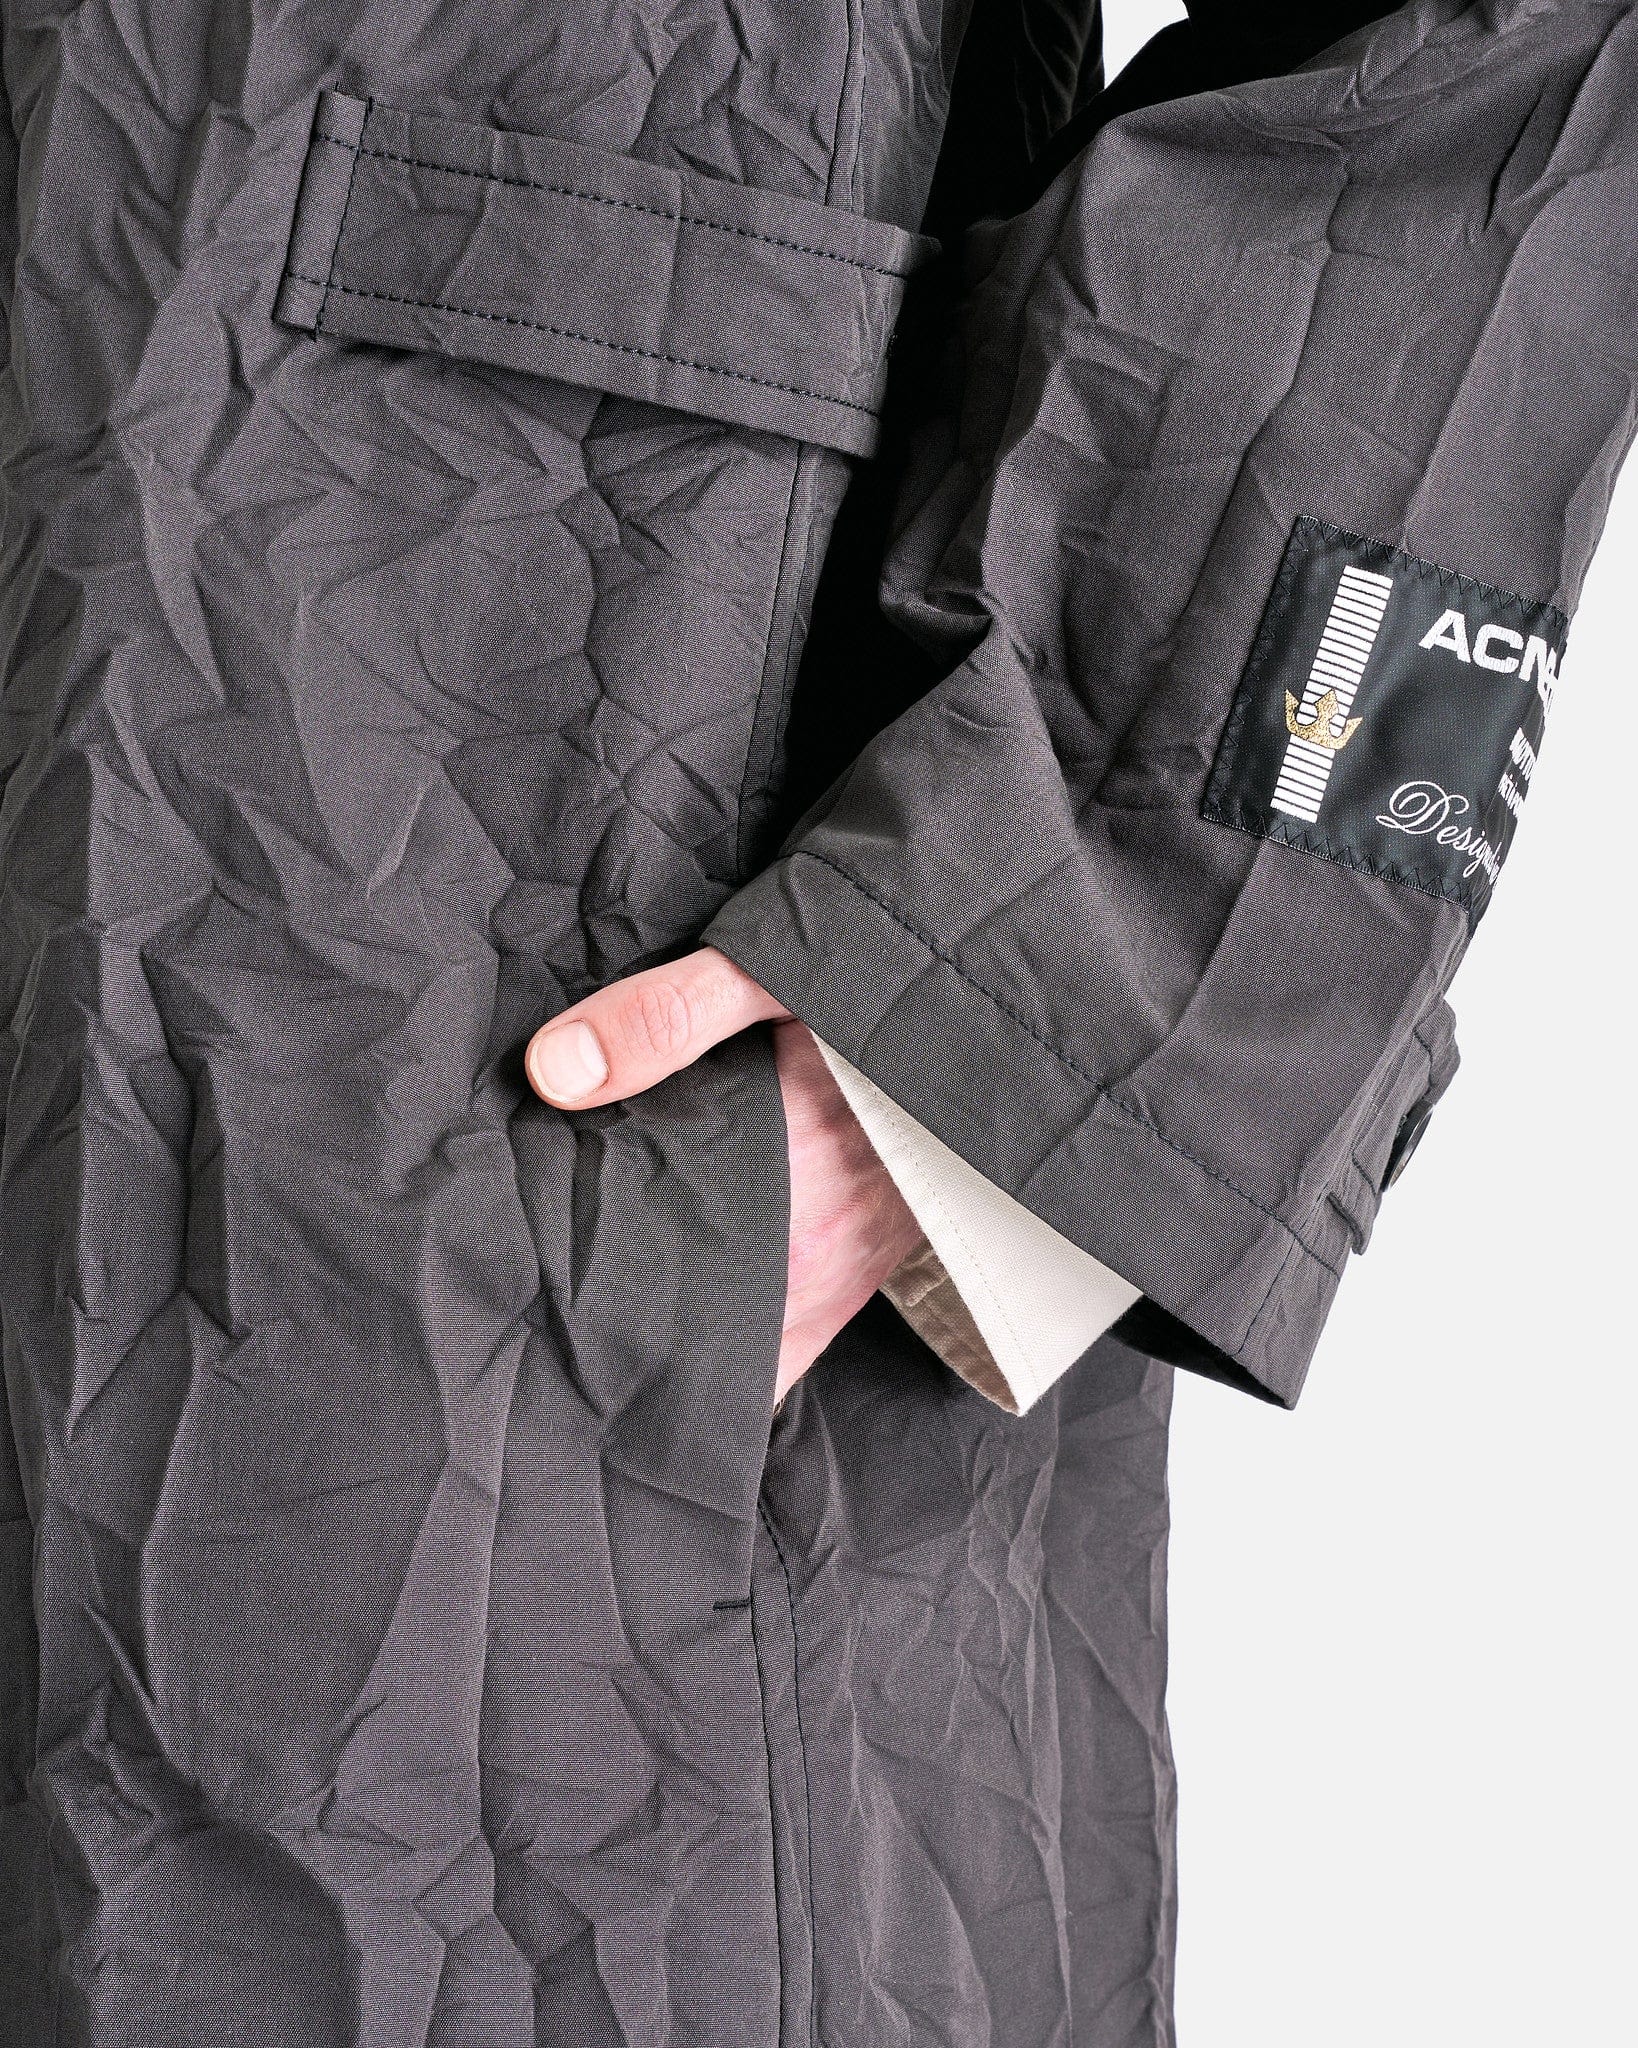 Acne Studios Men's Coat Long Coat in Dark Grey